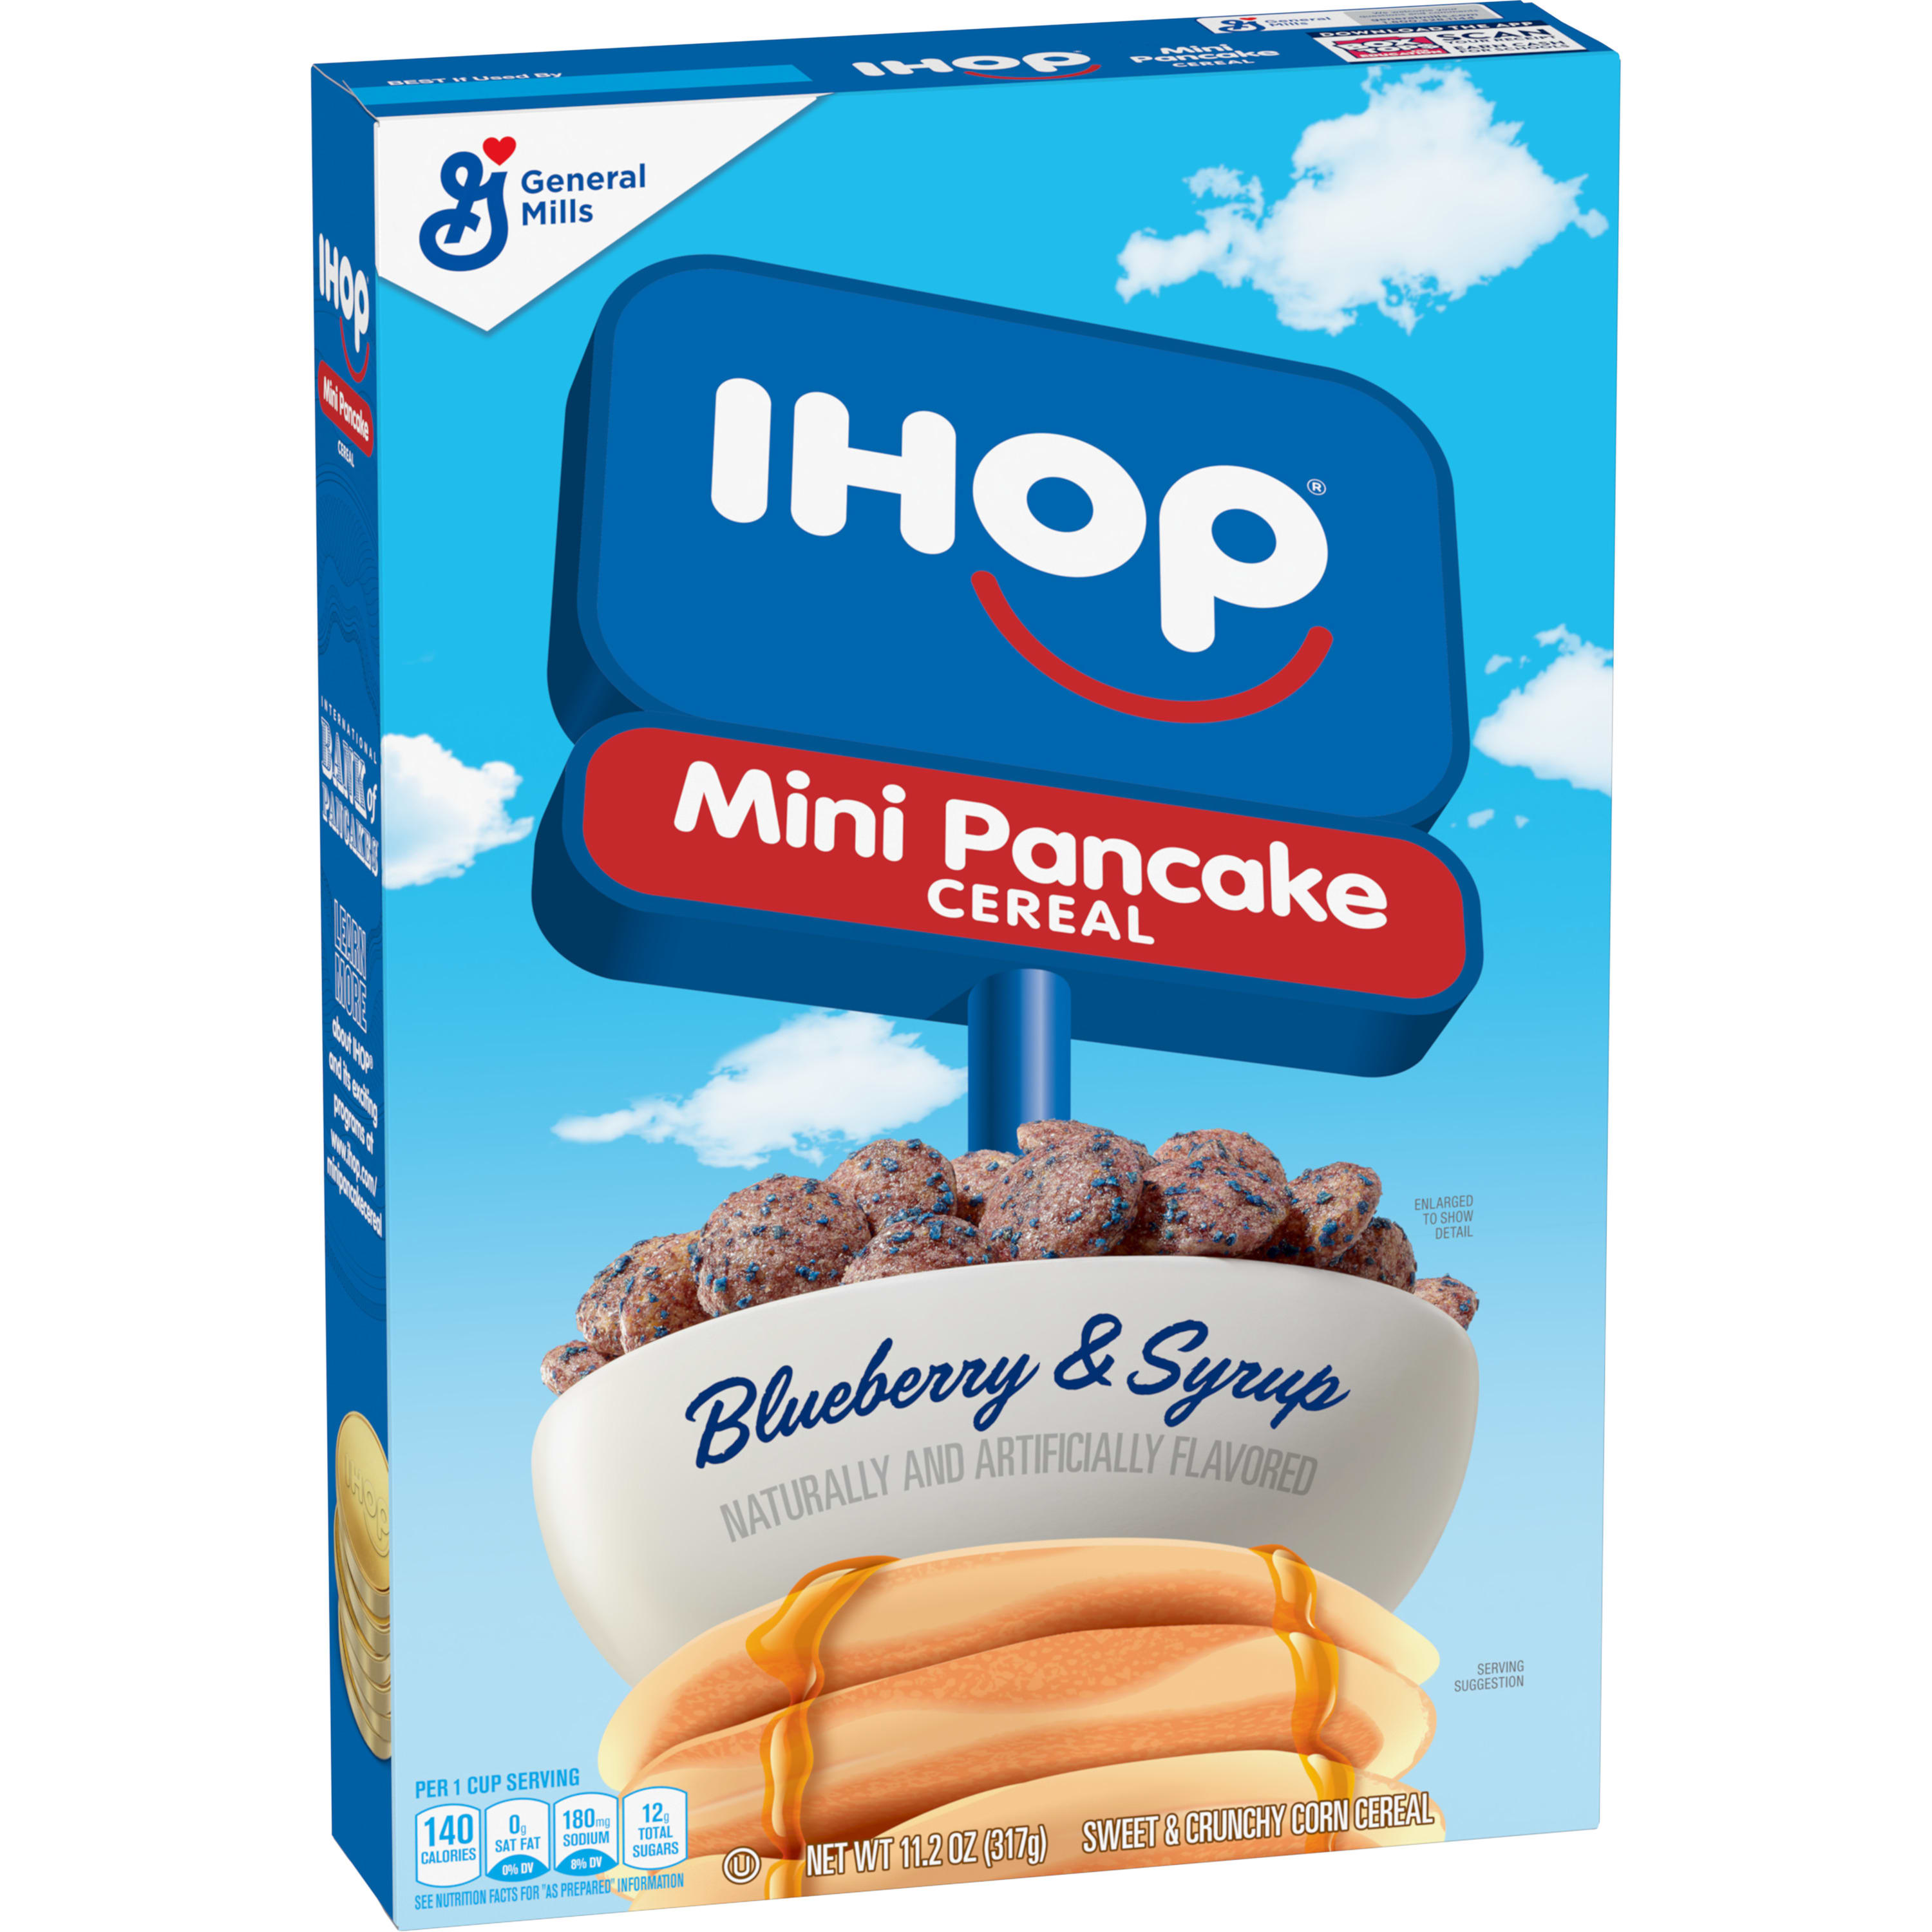 IHOP turns pancakes portable with new menu mashup